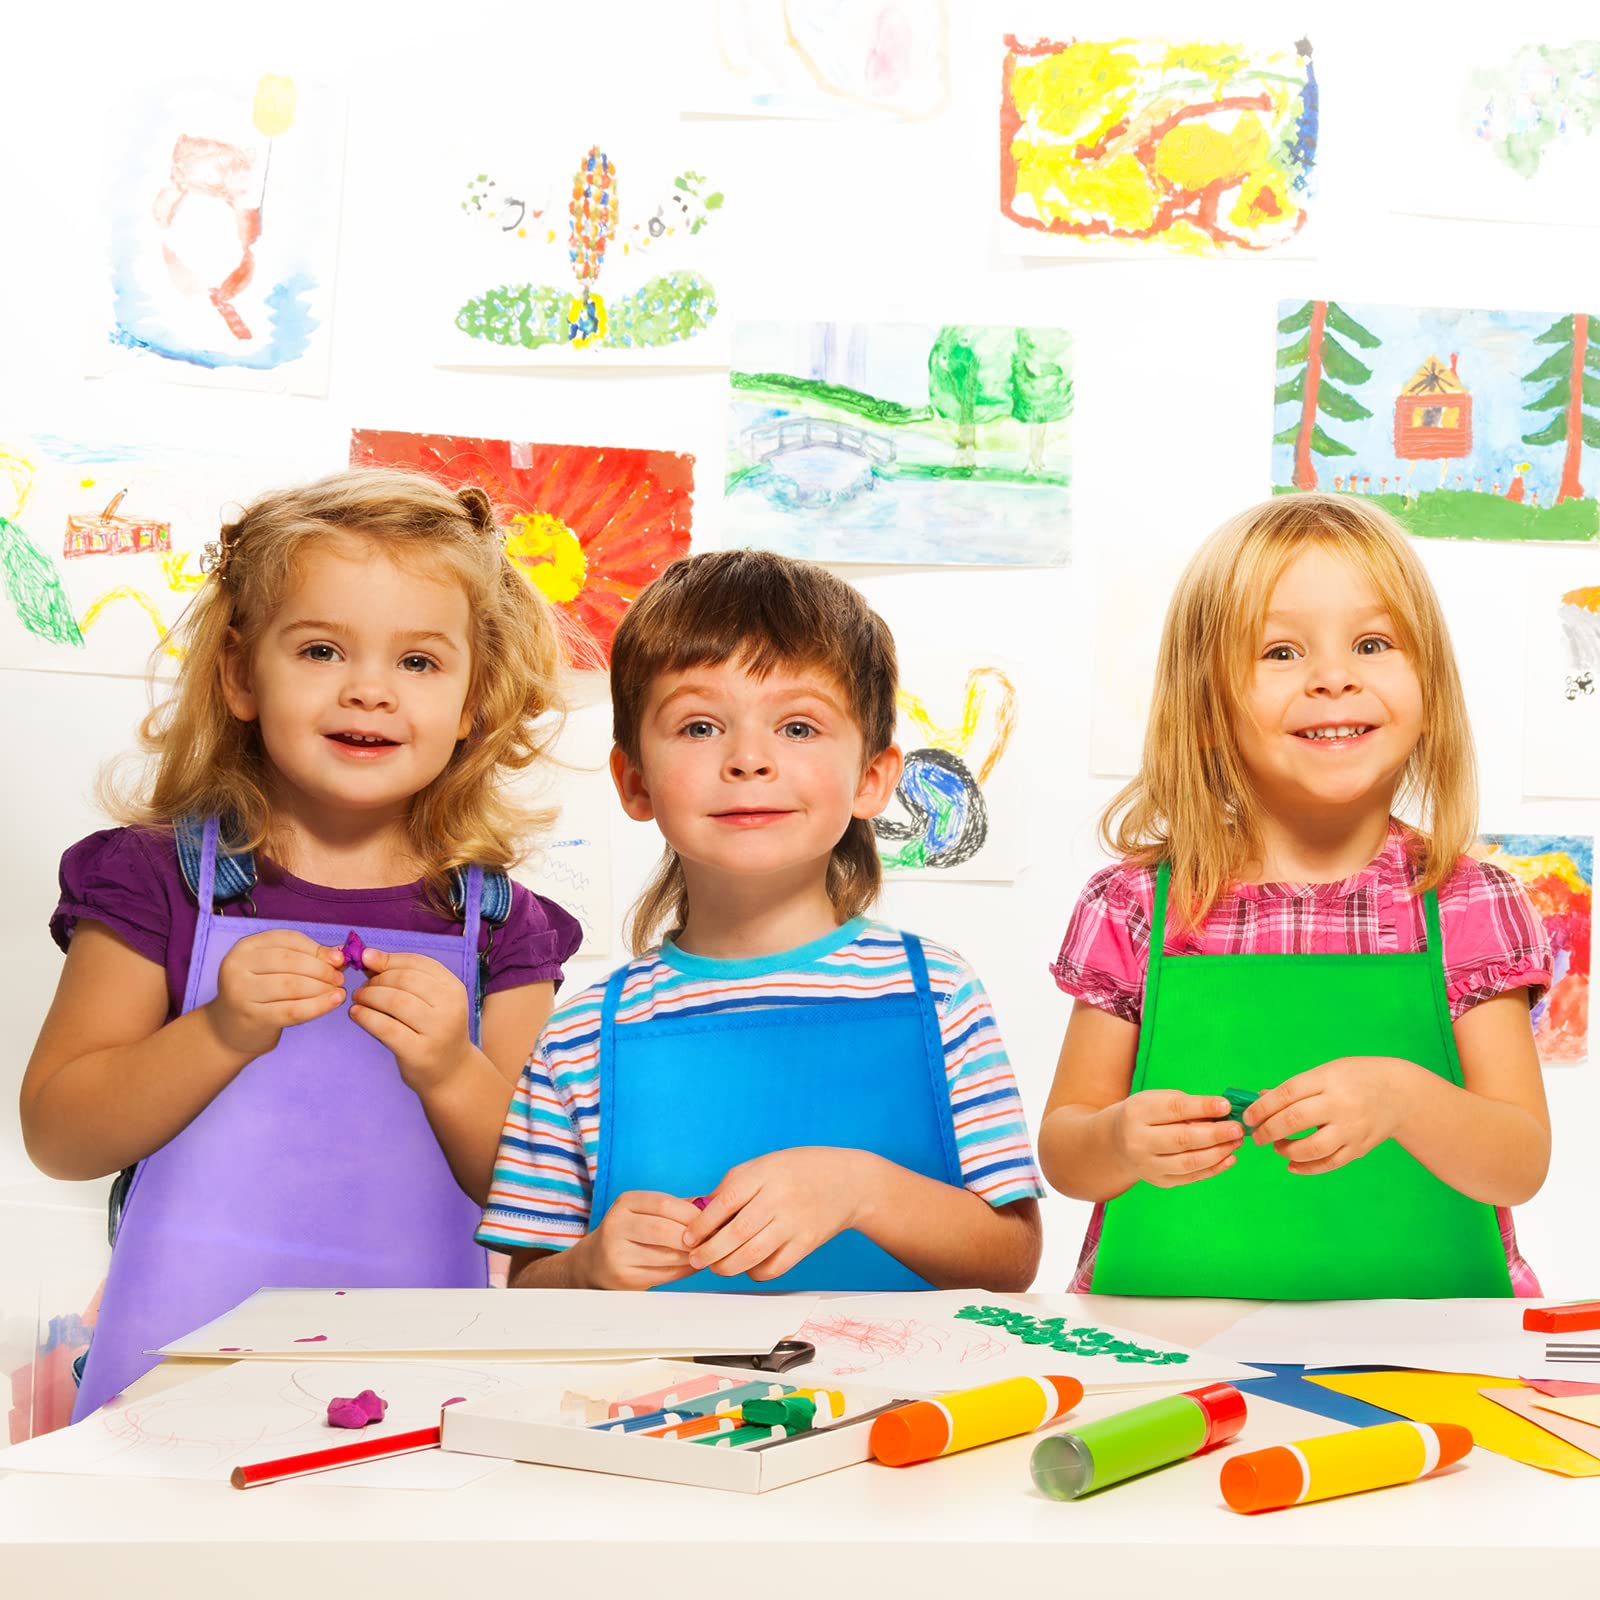 40 Pcs Kids Aprons Art Apron for Kids Painting Colorful Children's Artists Fabric Aprons Child DIY Art Smock Aprons